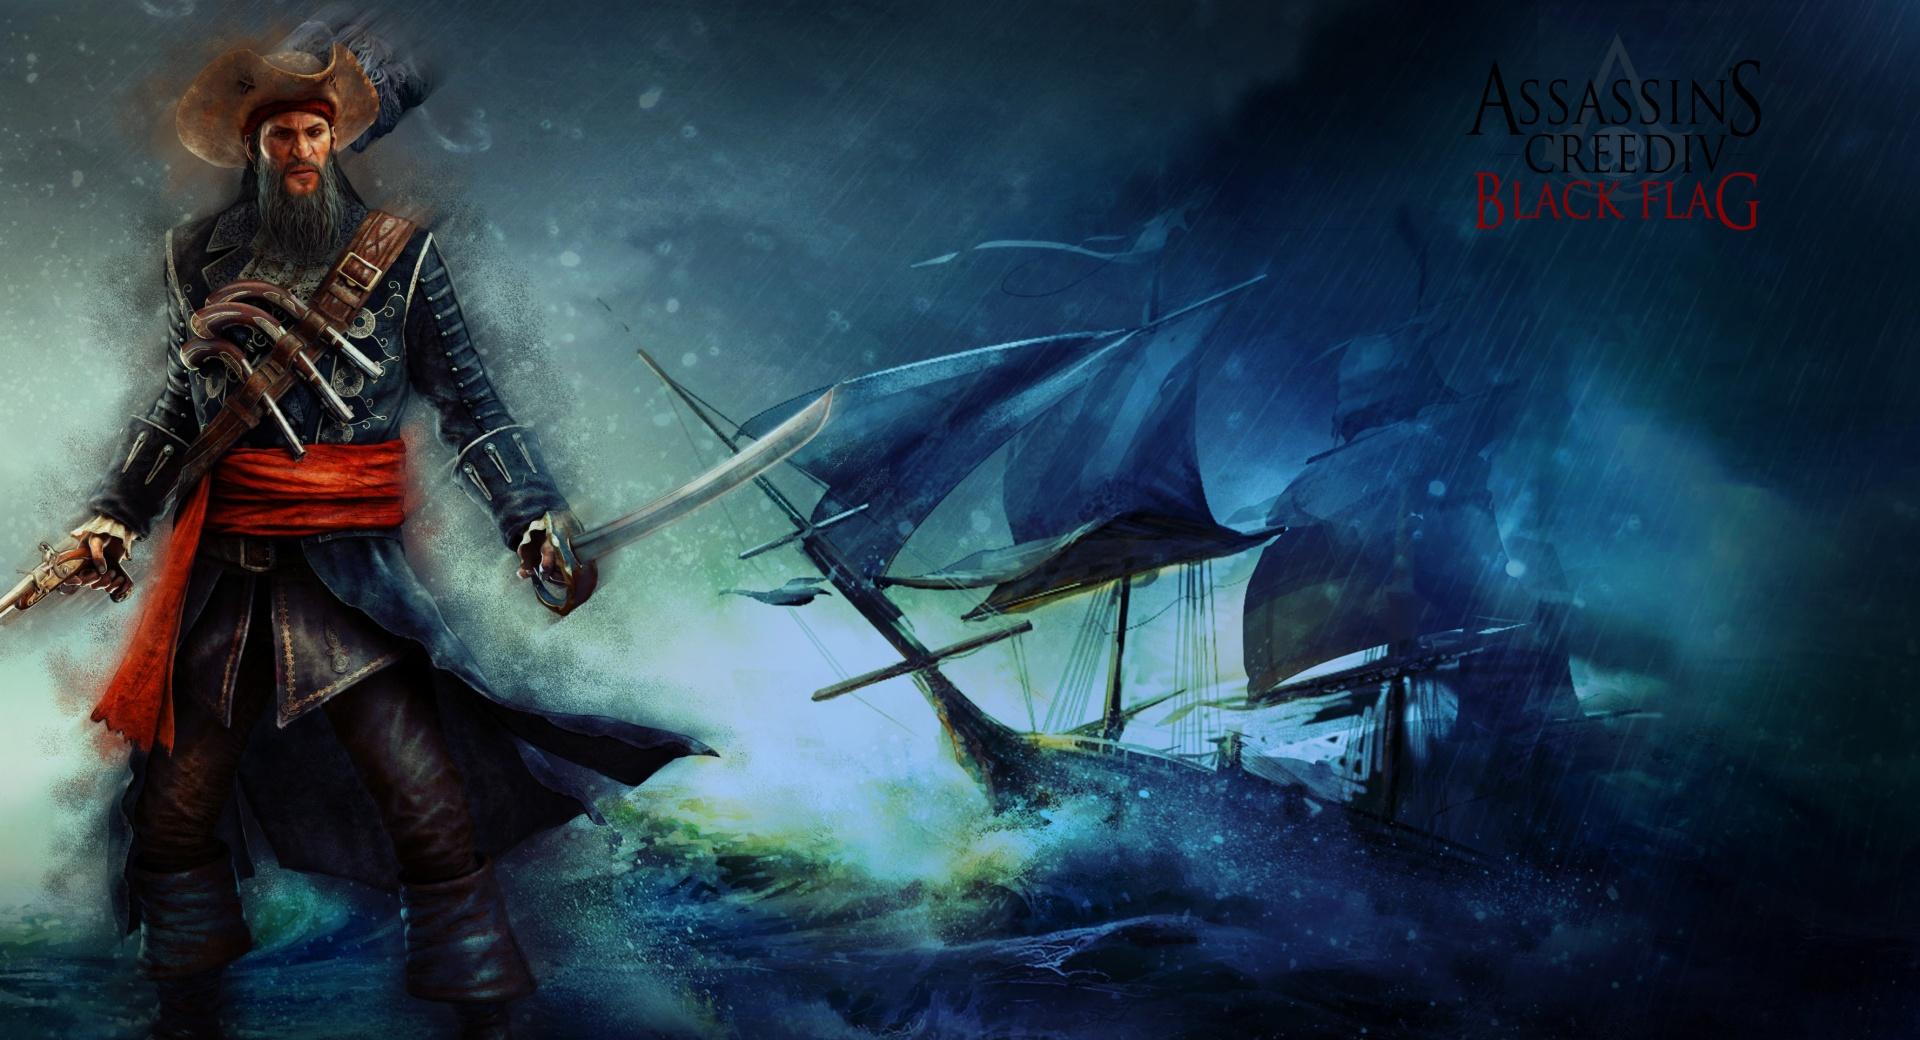 Assassins Creed IV Black Flag Blackbeard at 1024 x 1024 iPad size wallpapers HD quality